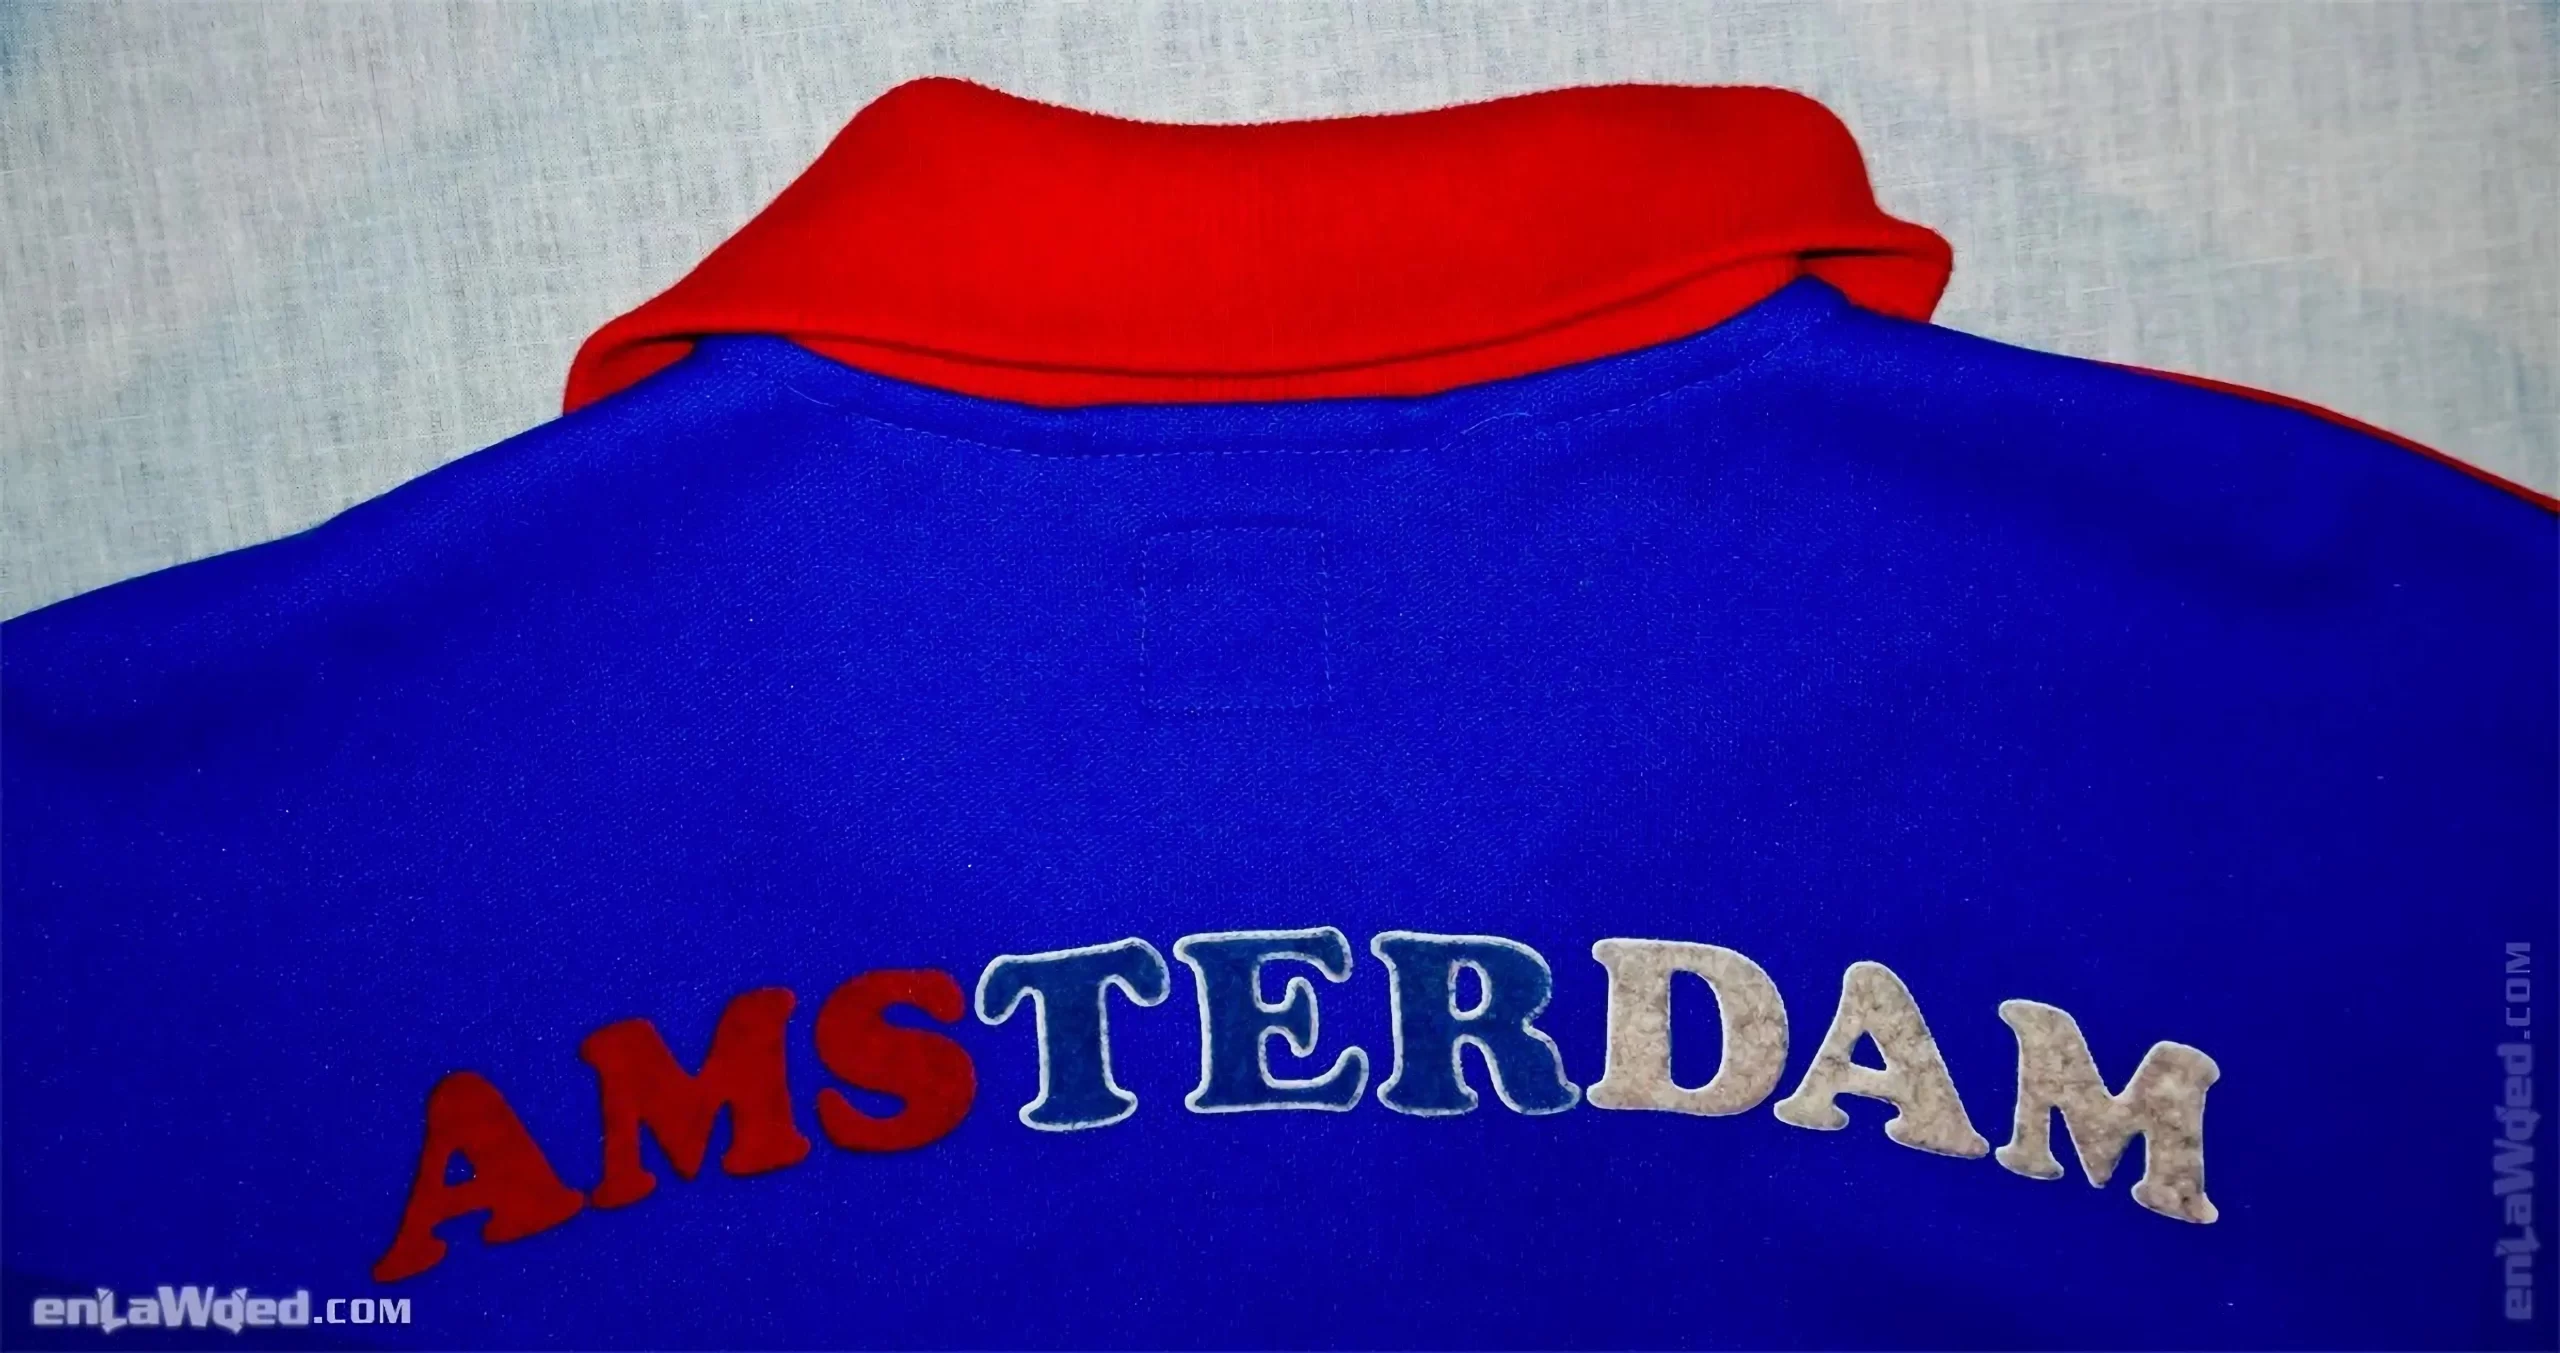 Men’s 2006 Amsterdam Track Top by Adidas Originals: Thrilling (EnLawded.com file #lmchk90438ip2y122309kg9st)